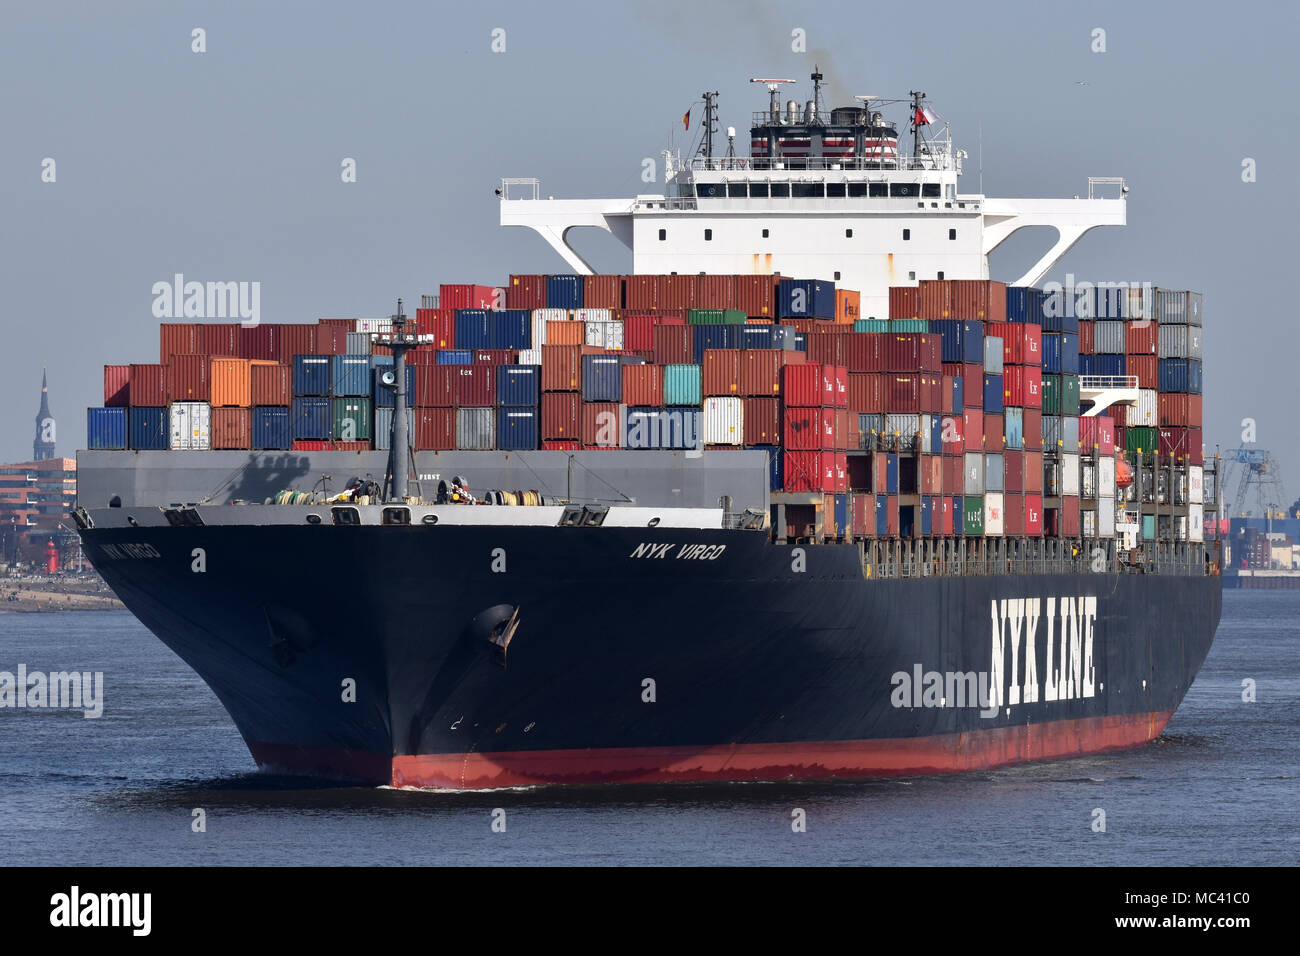 NYK Virgo leaving port of Hamburg Stock Photo